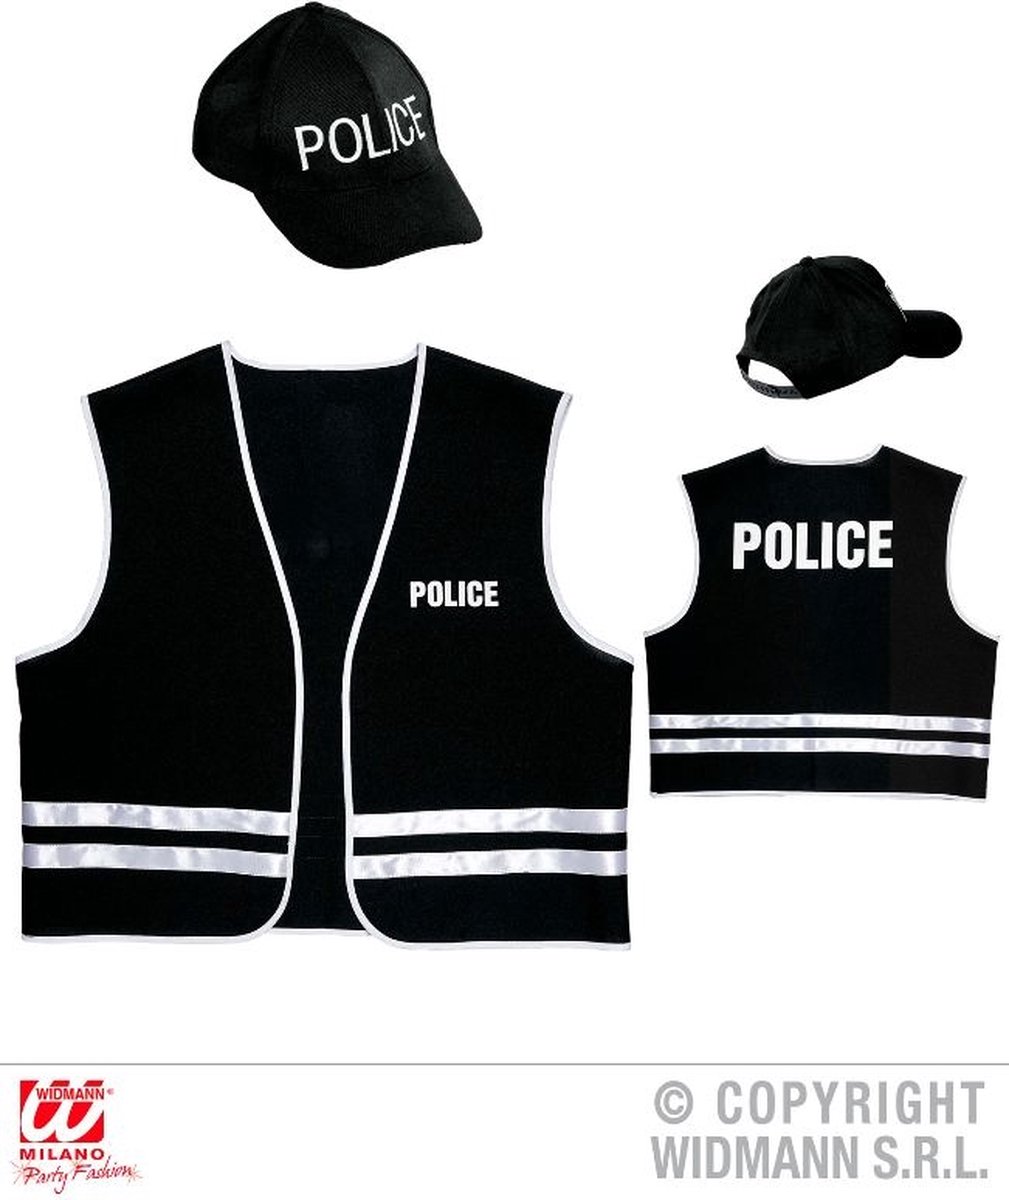 Widmann - Politie & Detective Kostuum - Zwart Politievest Met Cap Volwassen - Zwart - Medium / Large - Carnavalskleding - Verkleedkleding